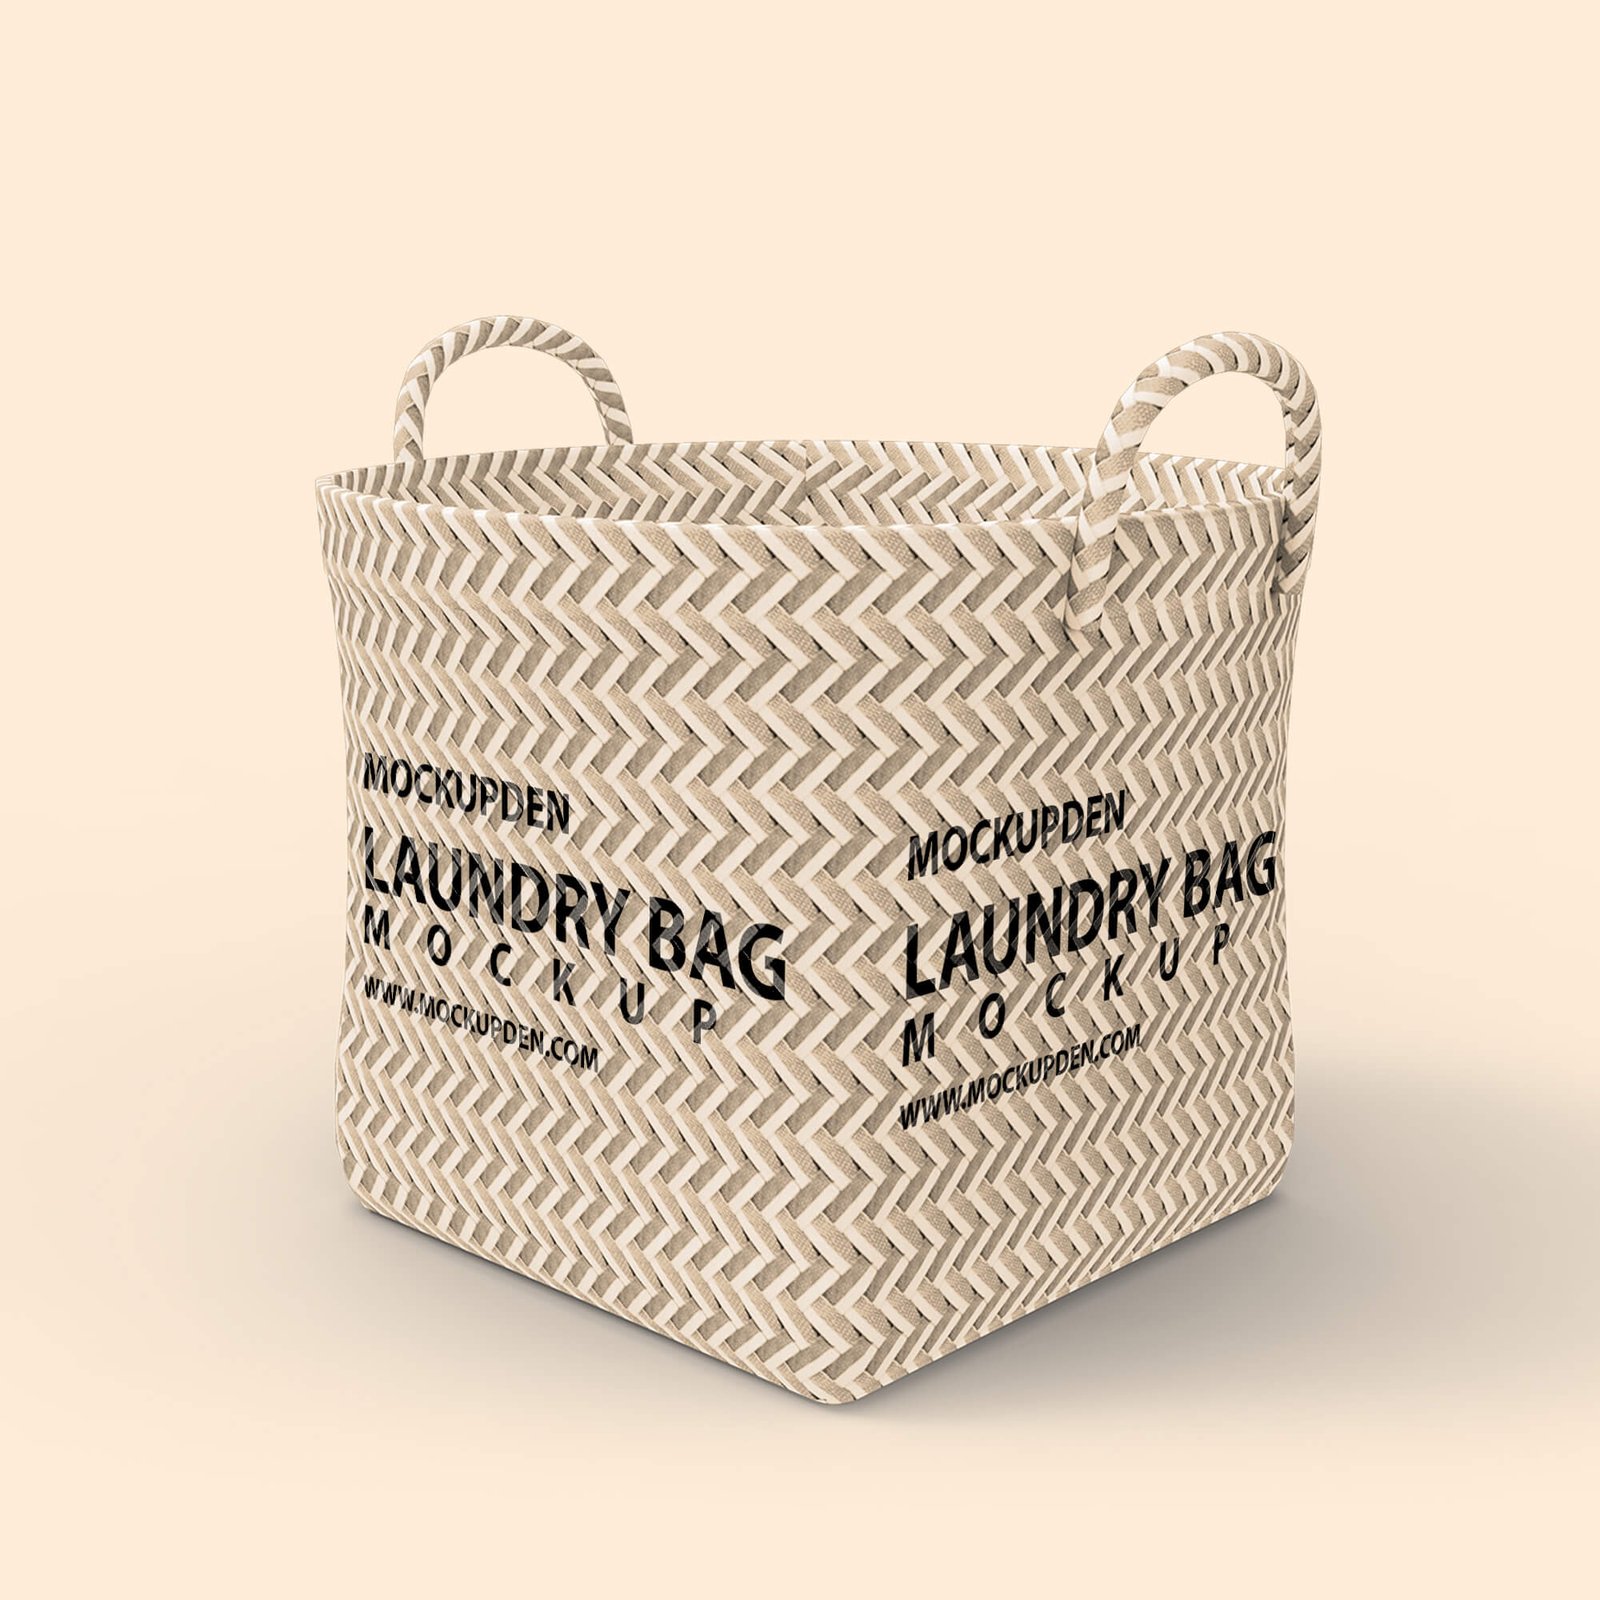 Design Free Laundry Bag Mockup PSD Template